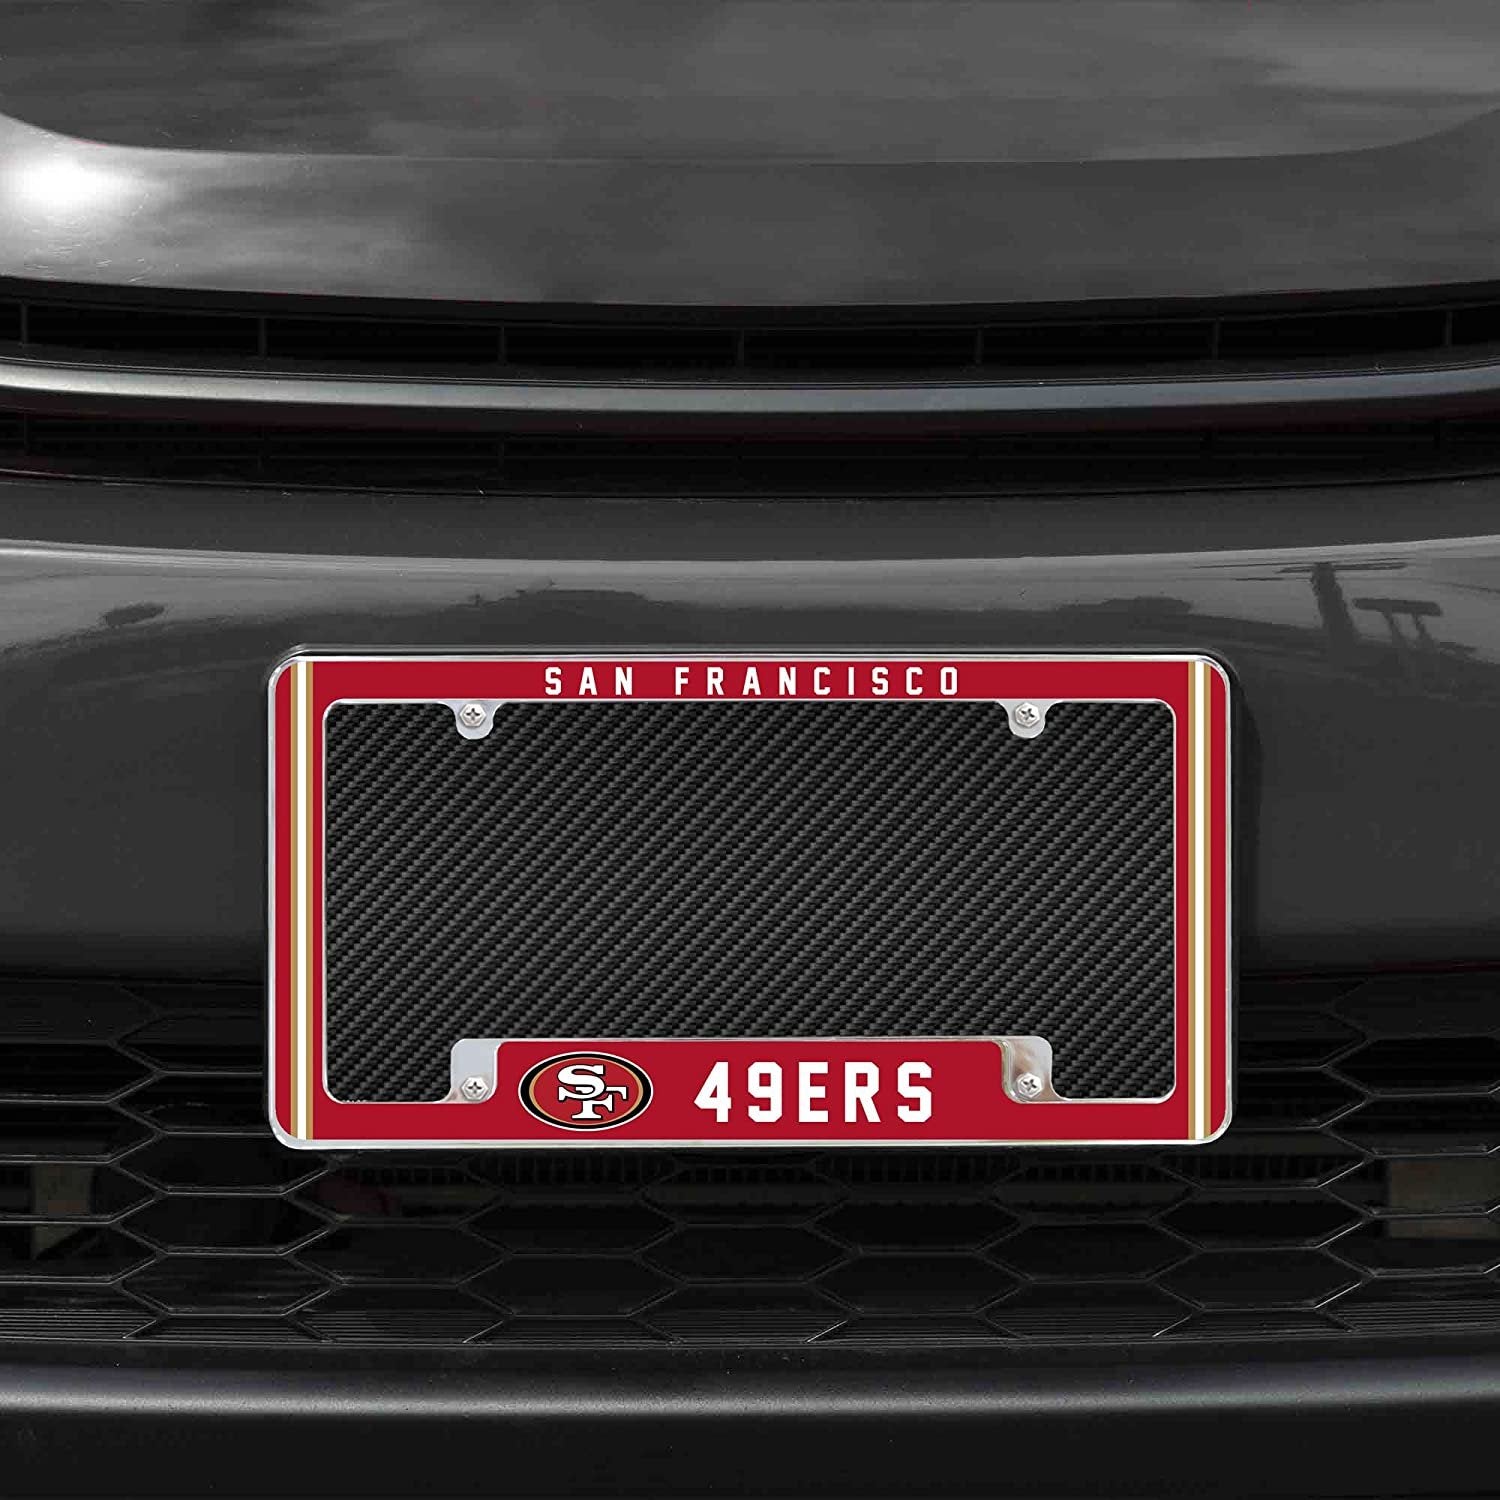 San Francisco 49ers Metal License Plate Frame Chrome Tag Cover Alternate Design 6x12 Inch